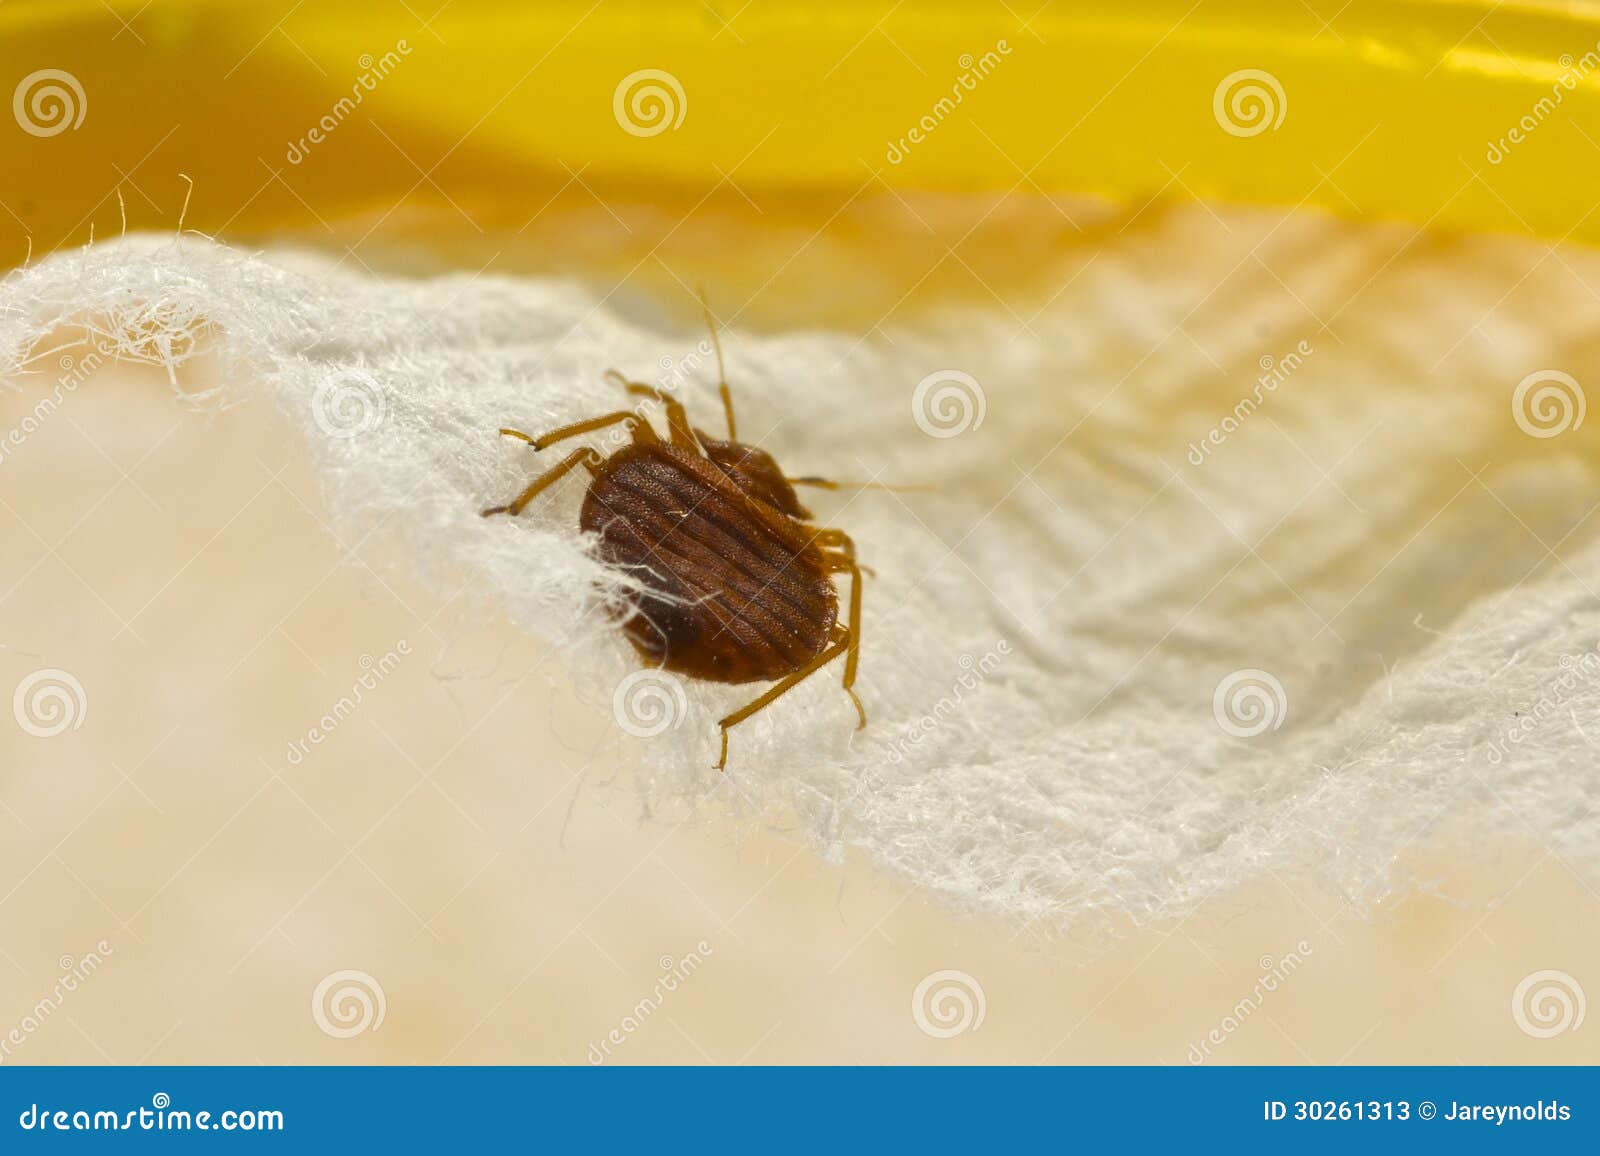 bed bug